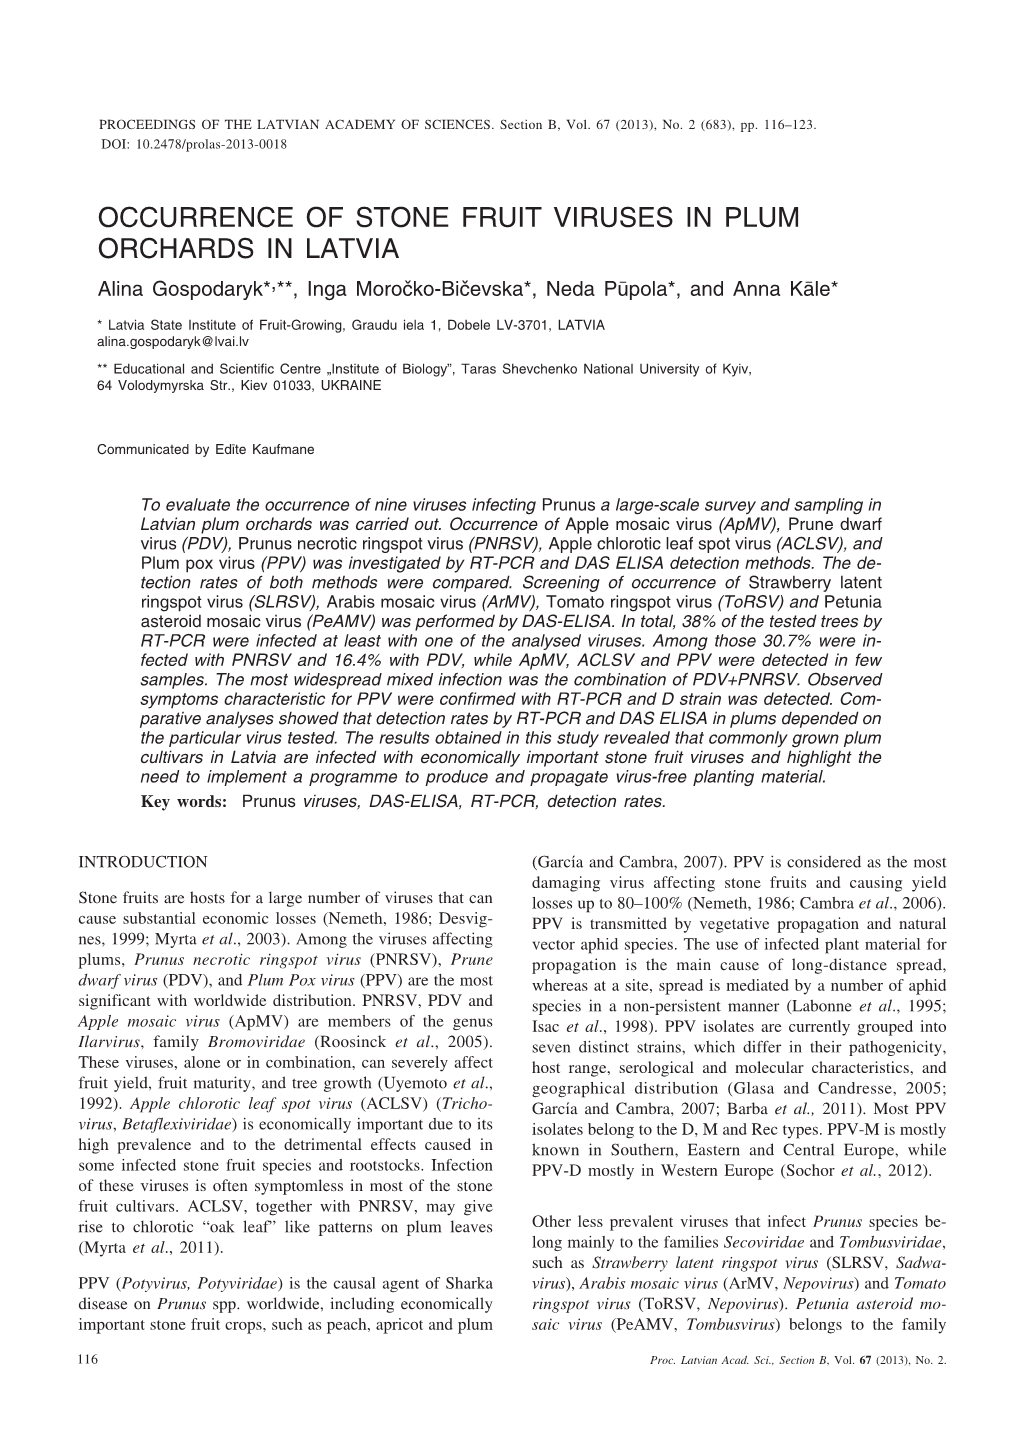 OCCURRENCE of STONE FRUIT VIRUSES in PLUM ORCHARDS in LATVIA Alina Gospodaryk*,**, Inga Moroèko-Bièevska*, Neda Pûpola*, and Anna Kâle*